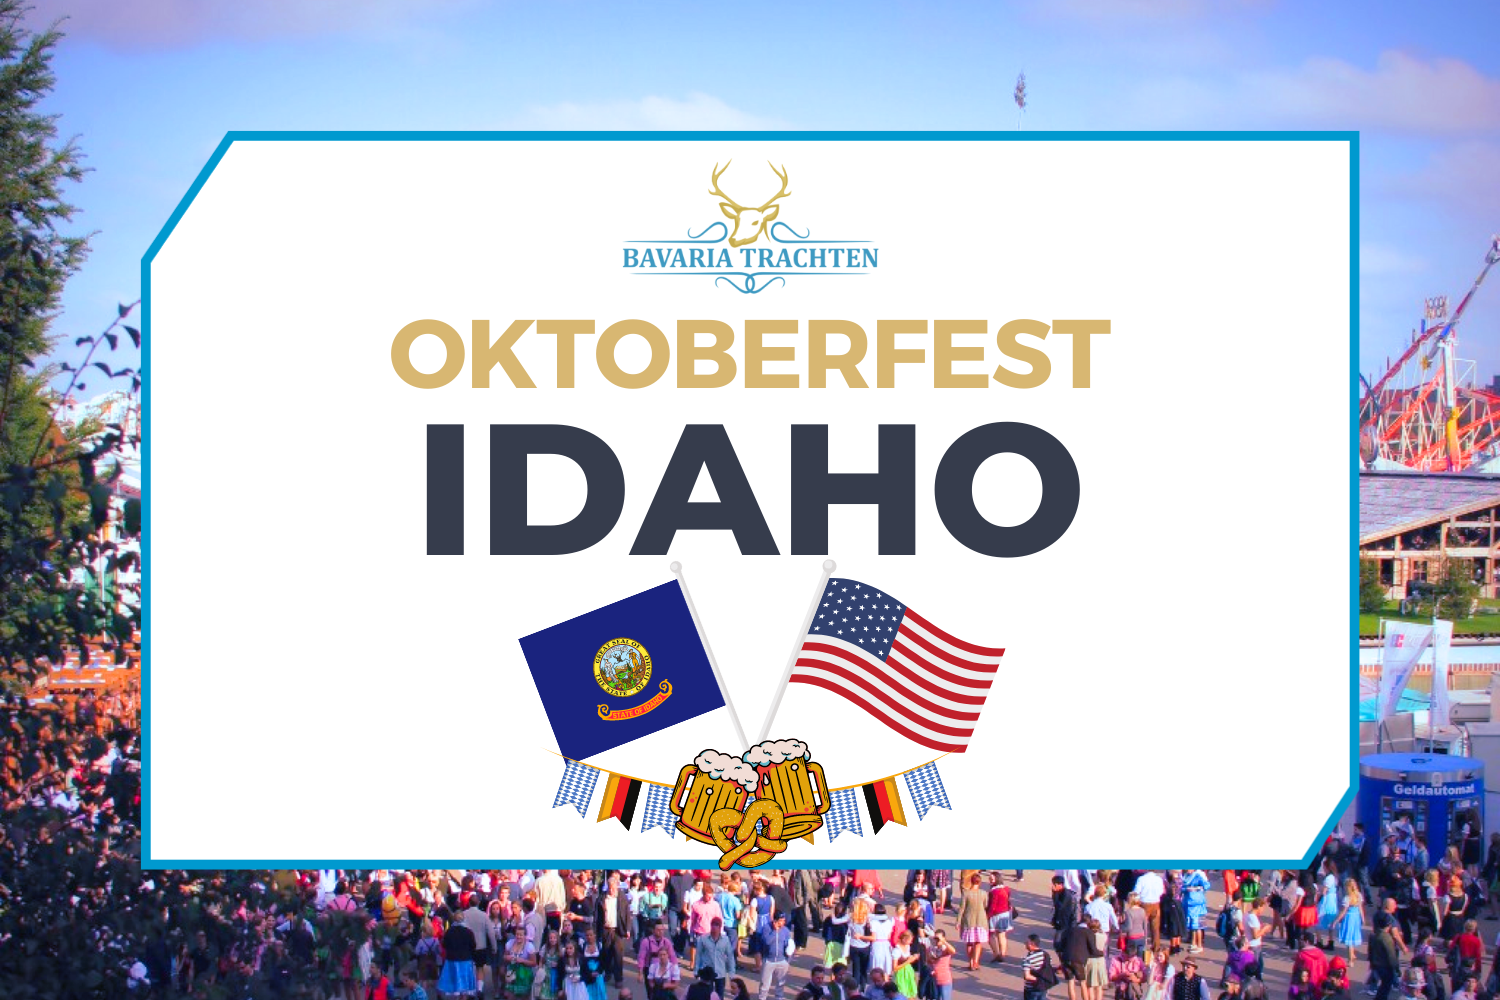 Oktoberfest in Idaho, USA